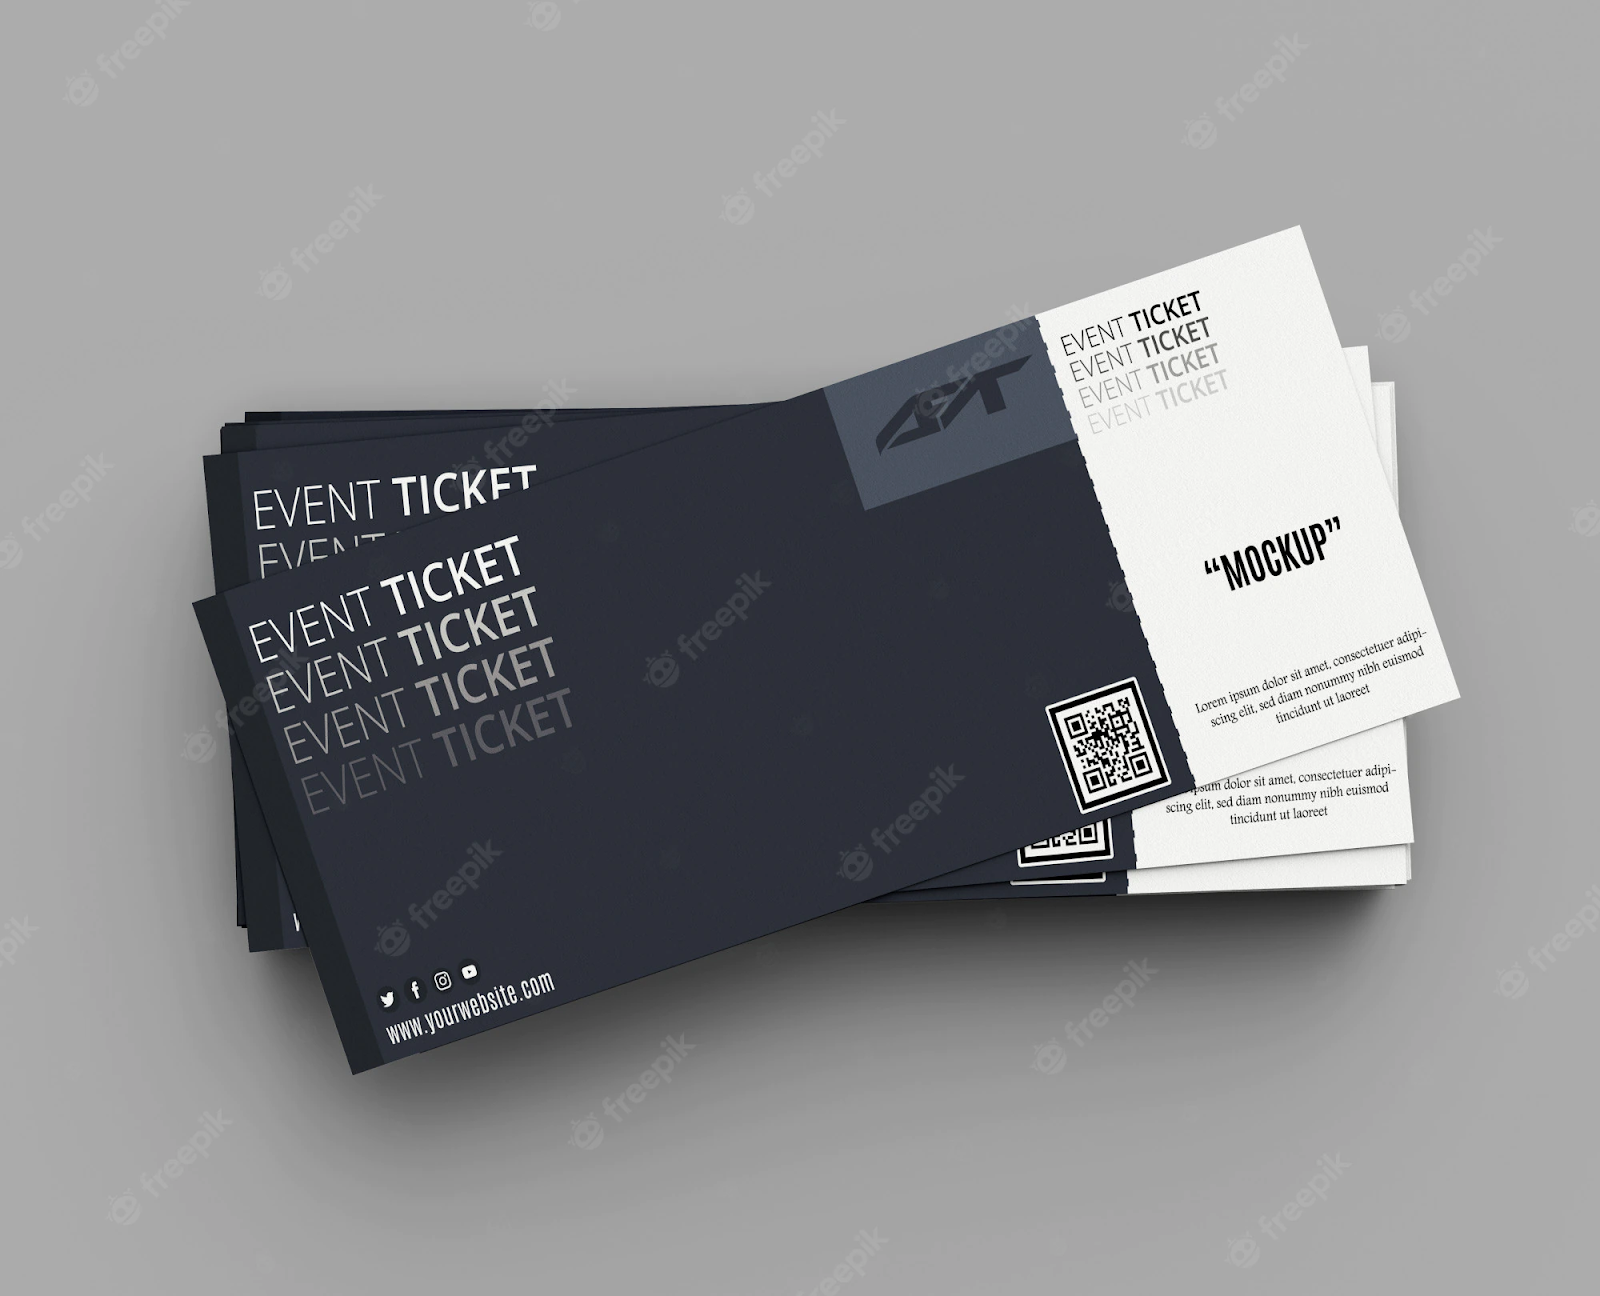 A mockup of an NFT ticket.